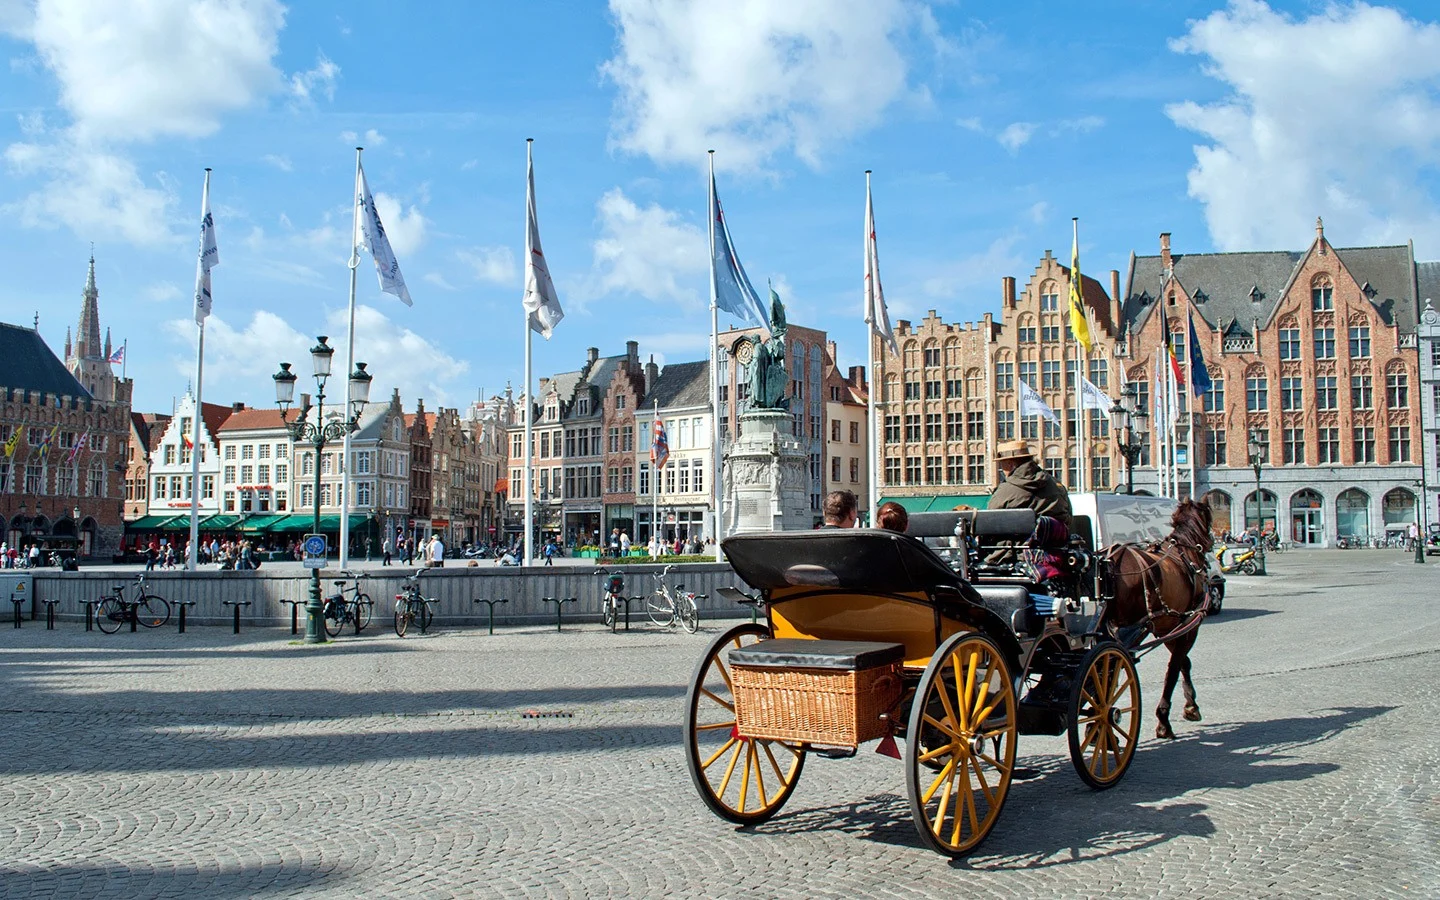 Grote-Markt in Bruges, Belgium